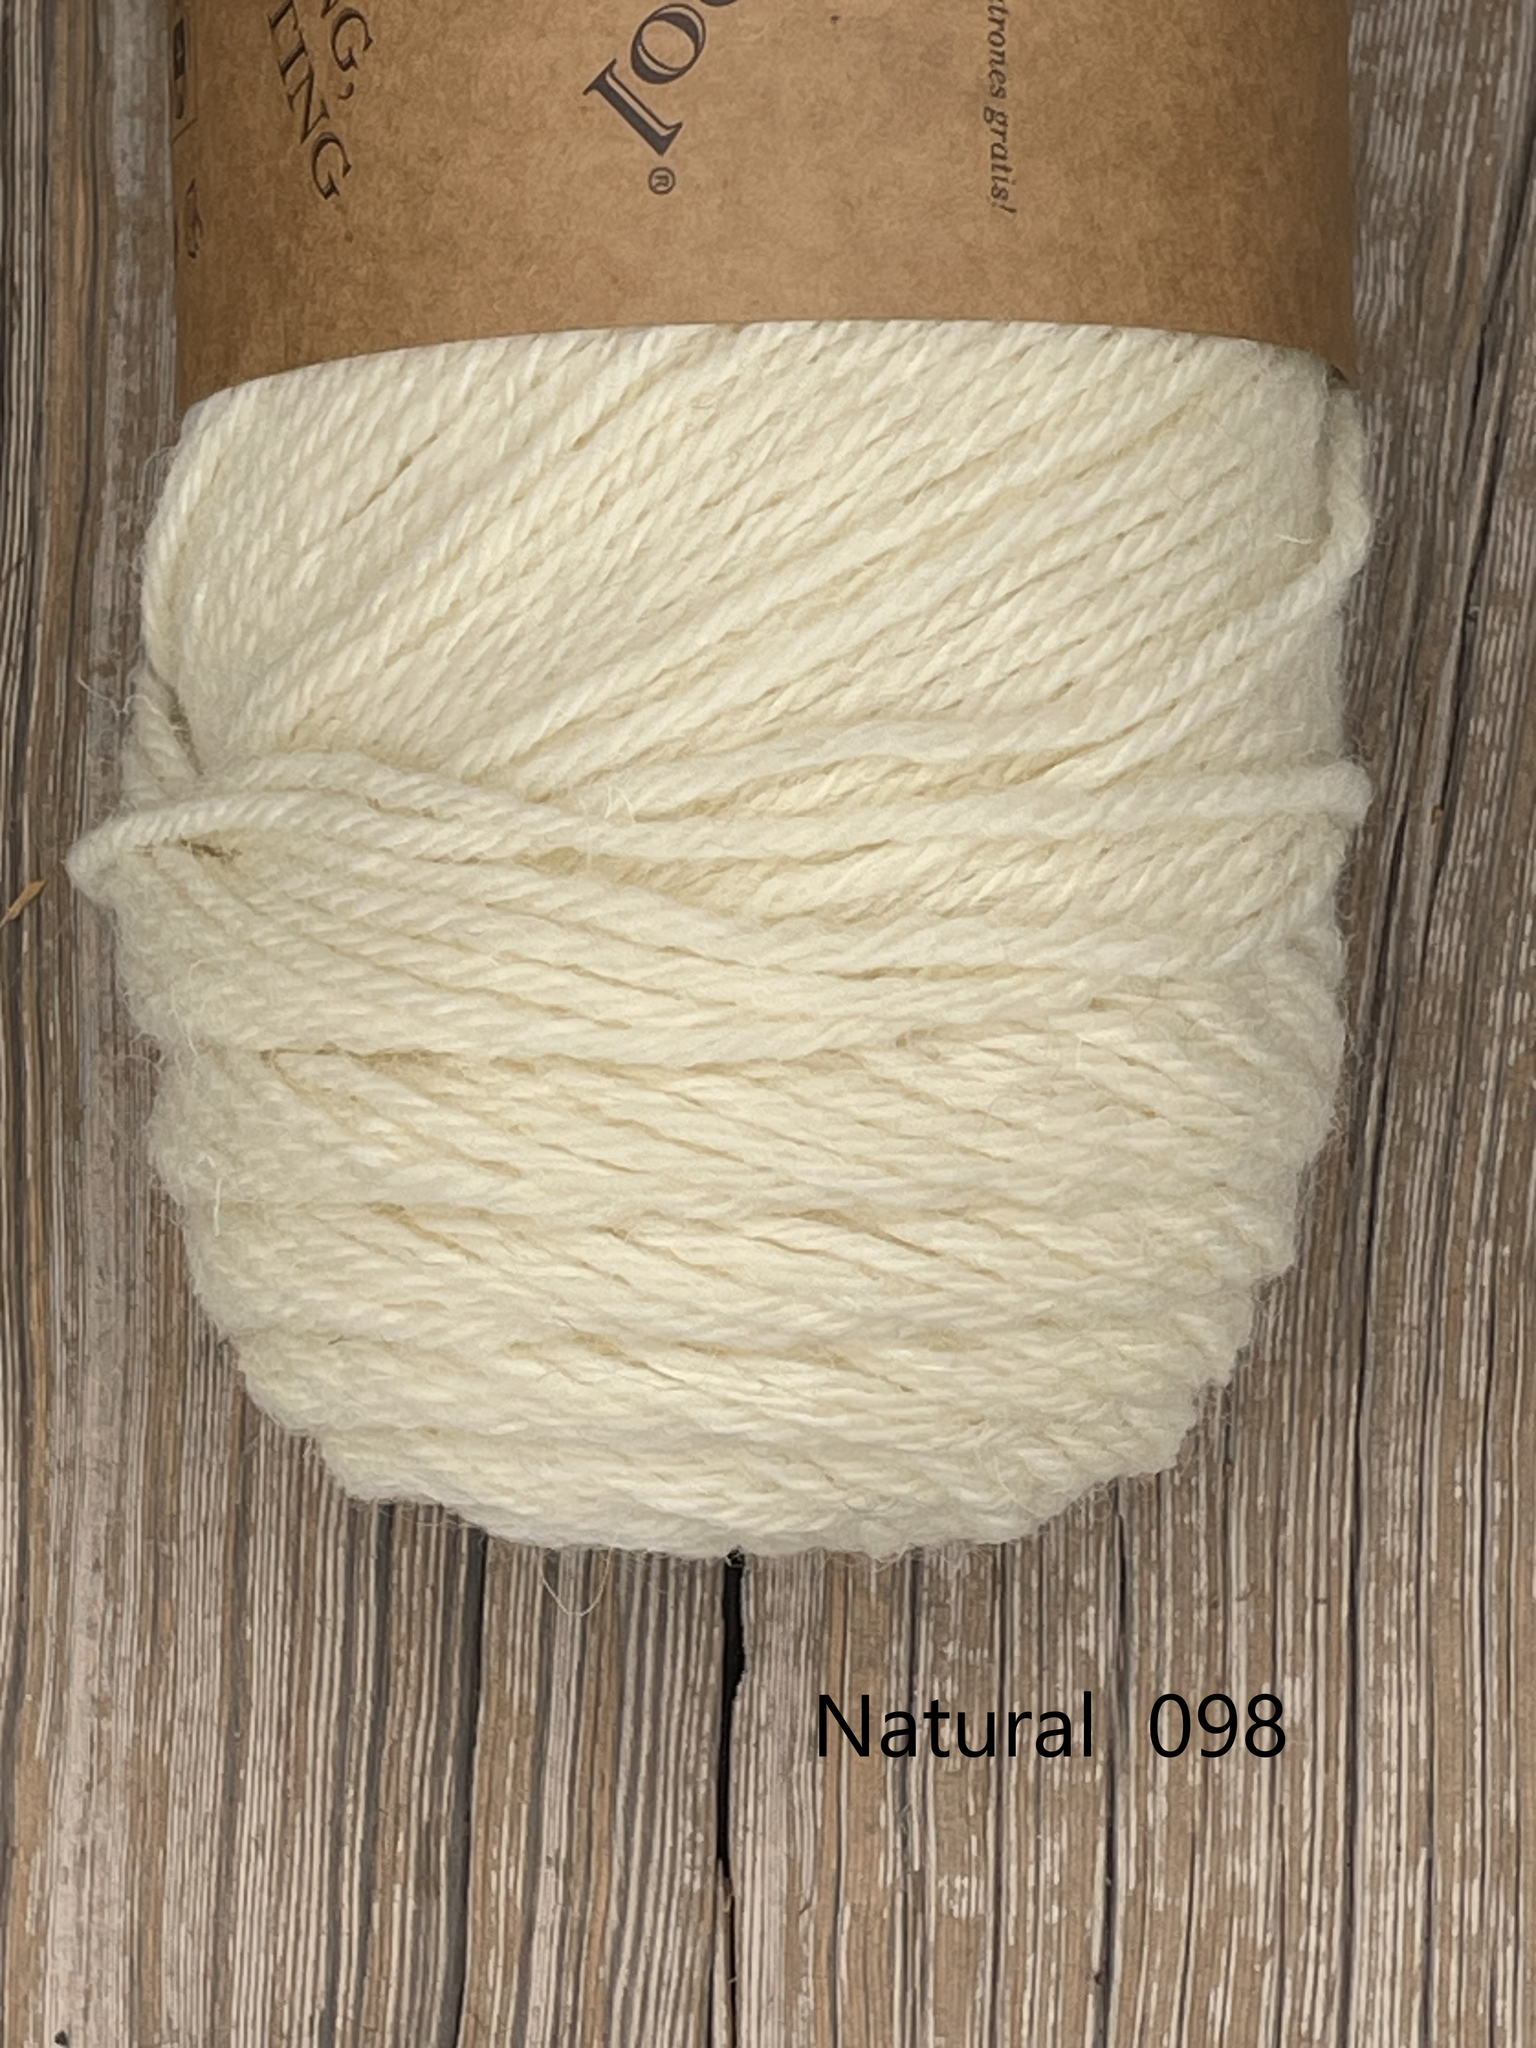 lion Brand fishermen's wool yarn 3 skeins birch tweed color # 202